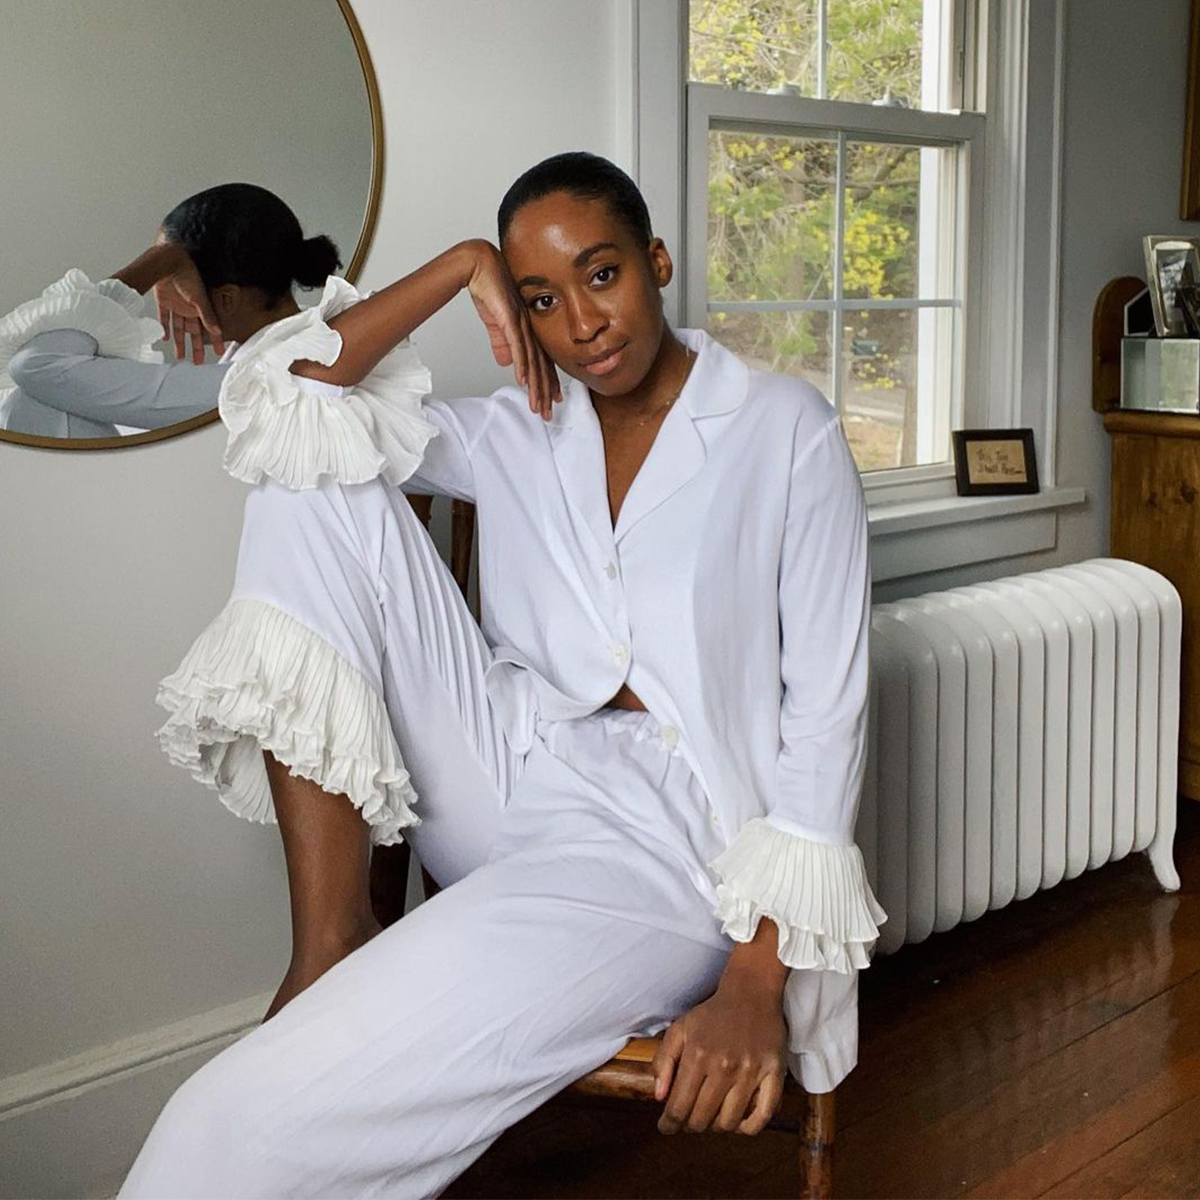 Women's Honeydew Intimates Pajamas & Robes